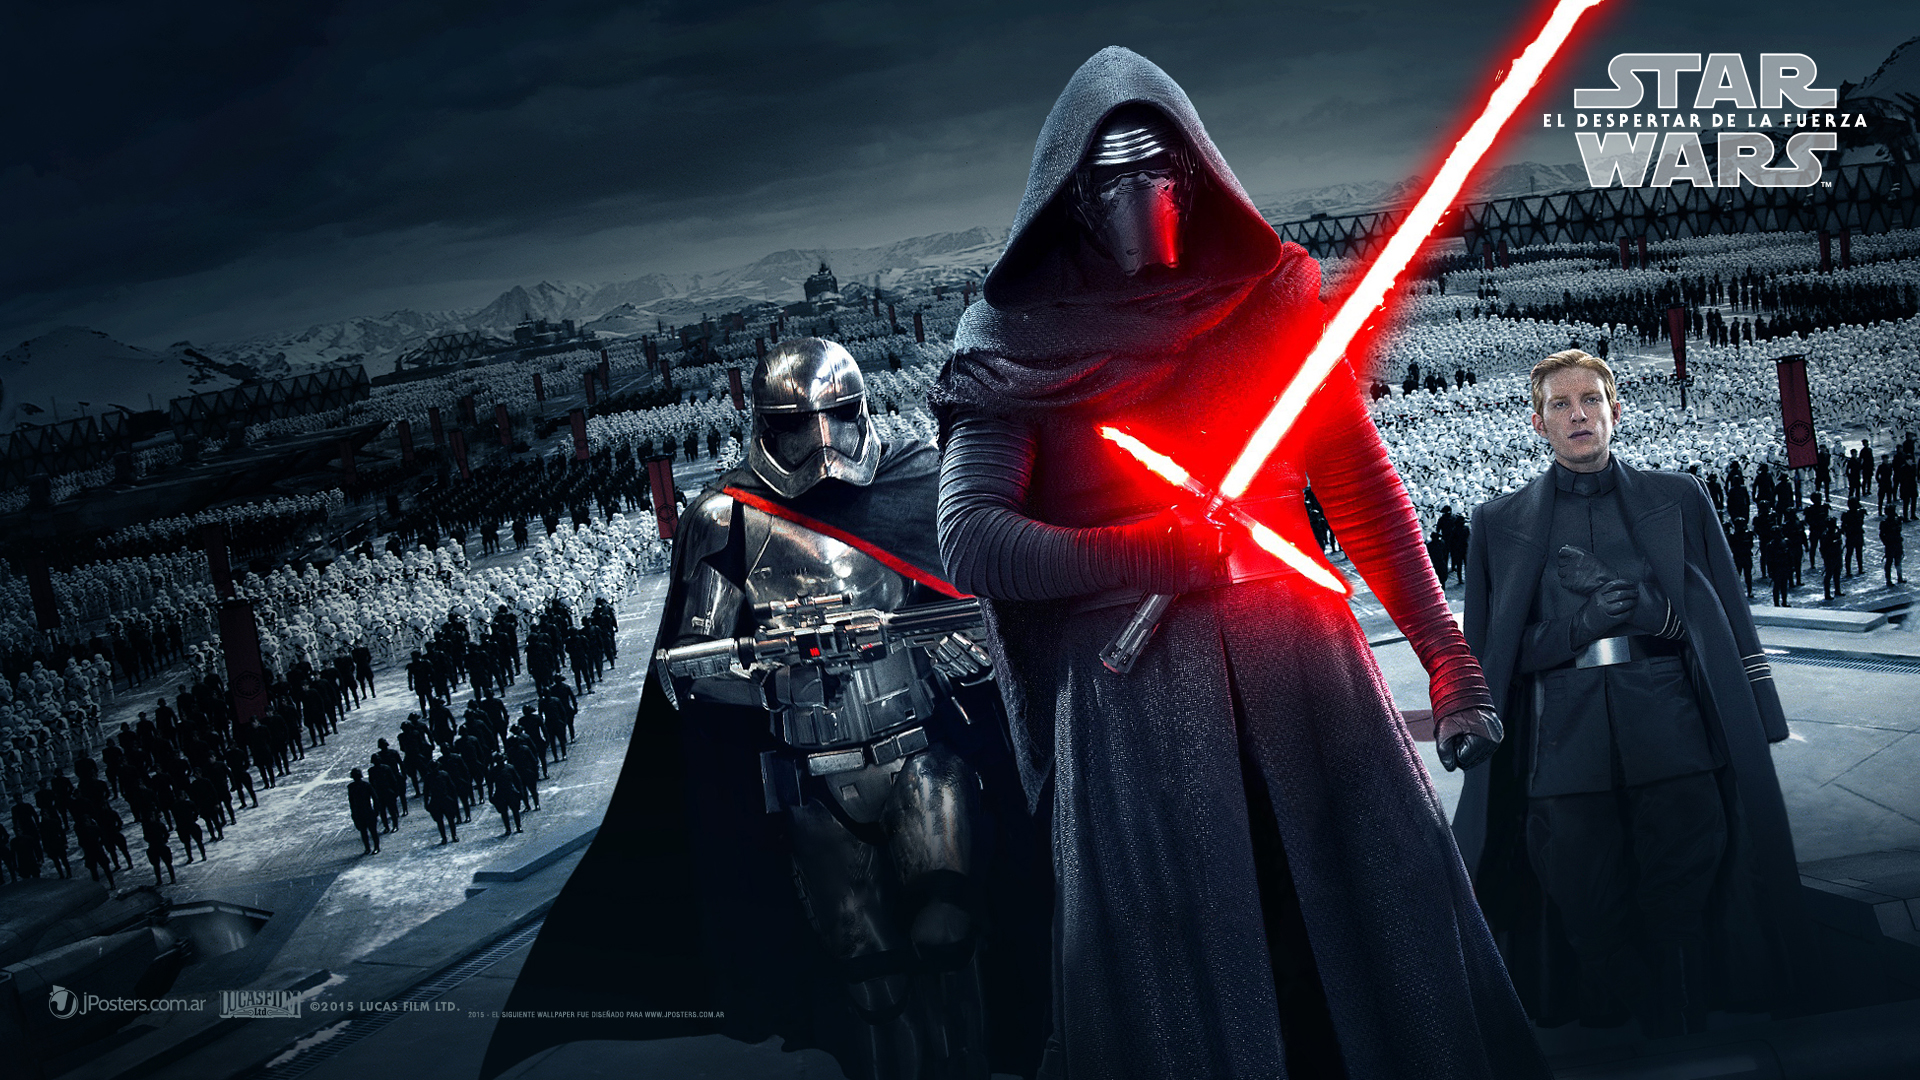 Star Wars: The Force Awakens, la scena tagliata